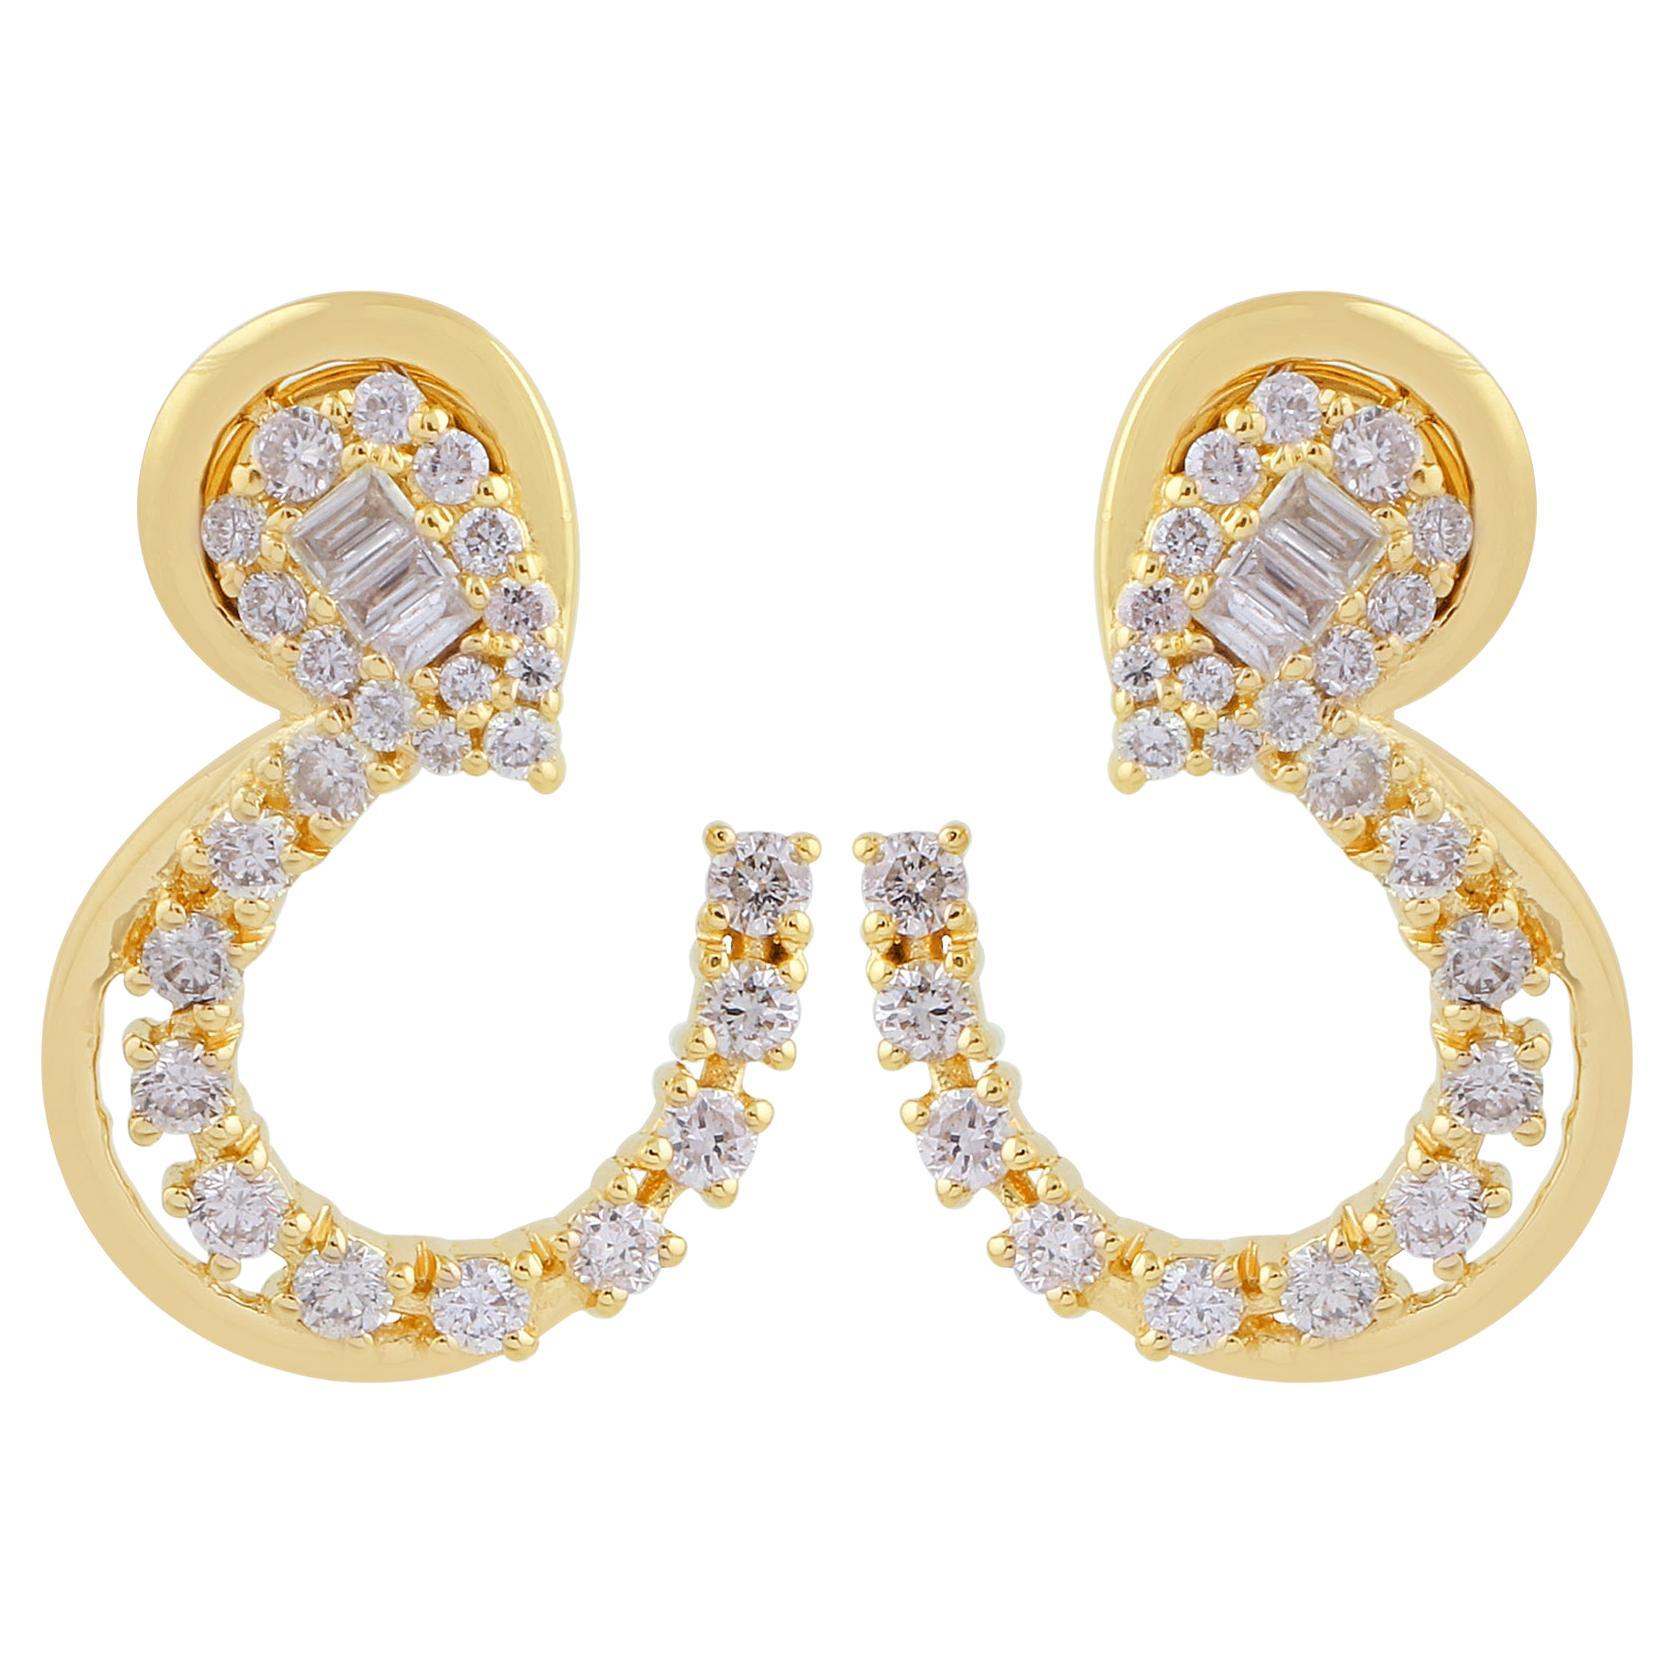 1.25 Carat SI Clarity HI Color Baguette Diamond Earrings 18 Karat Yellow Gold